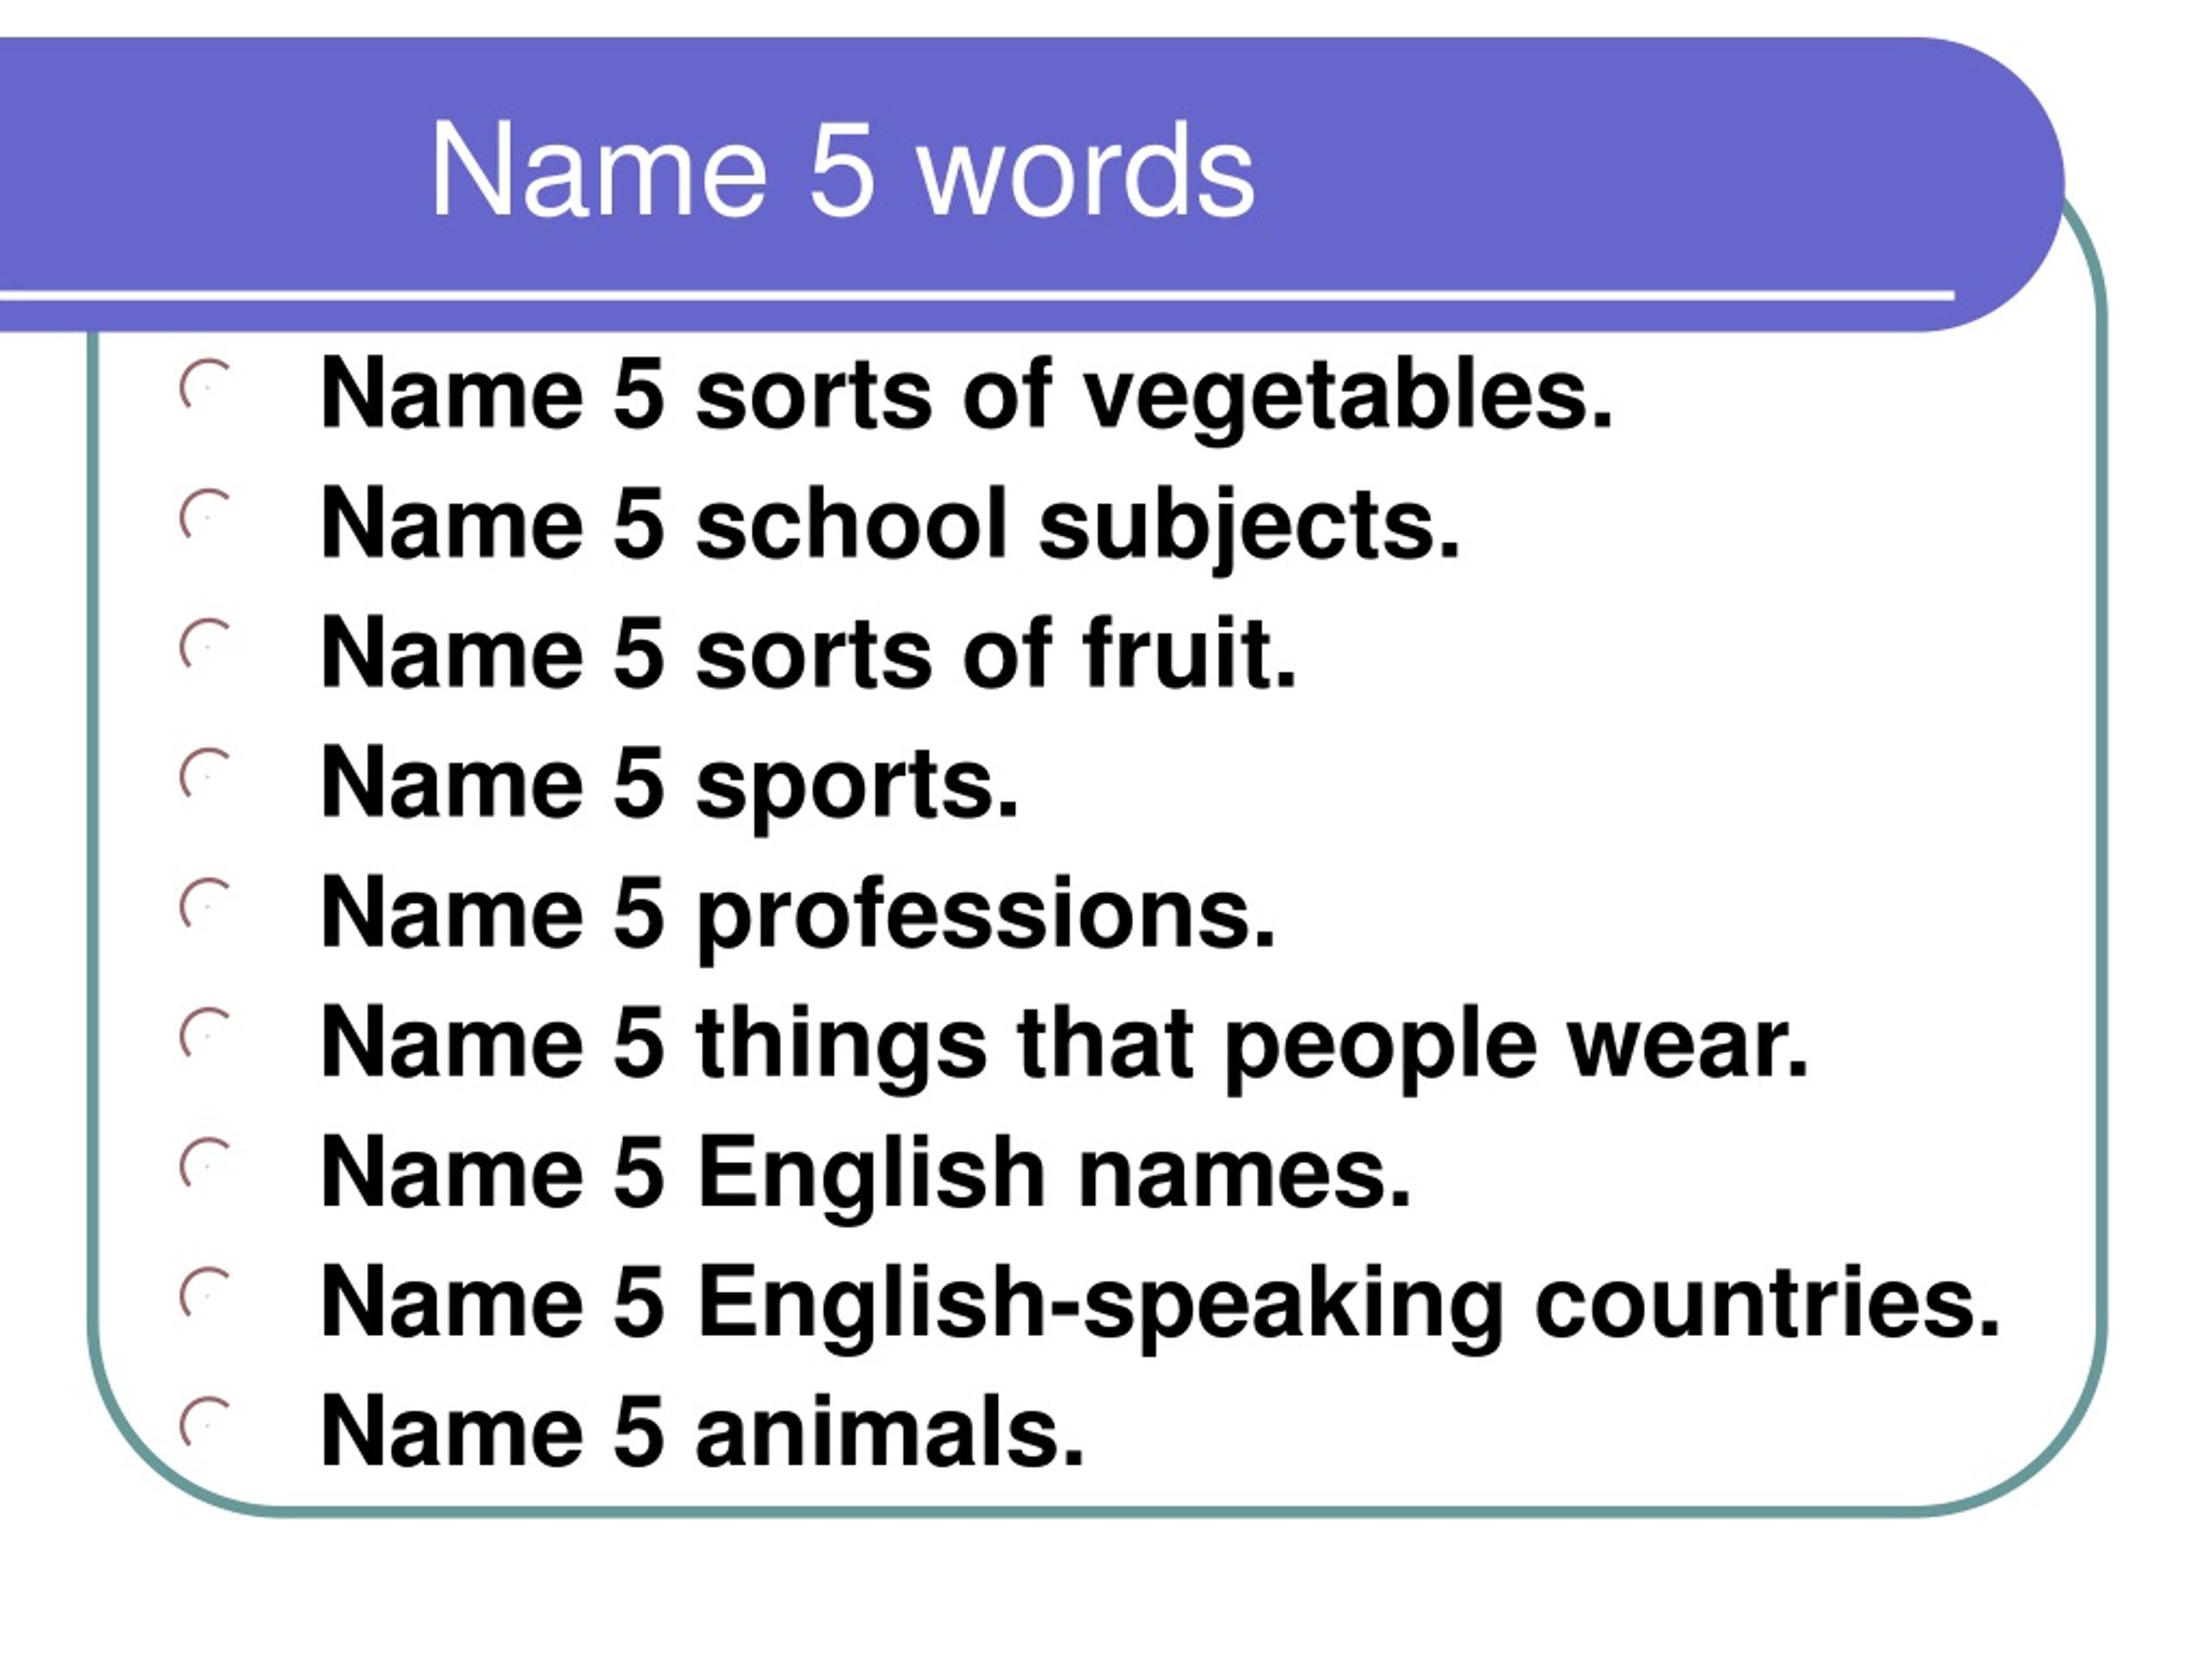 Name 5 sports. Warm up для урока английского языка. Warming up на уроке английского языка. Warming up activities на уроках английского языка. Name 5 things.